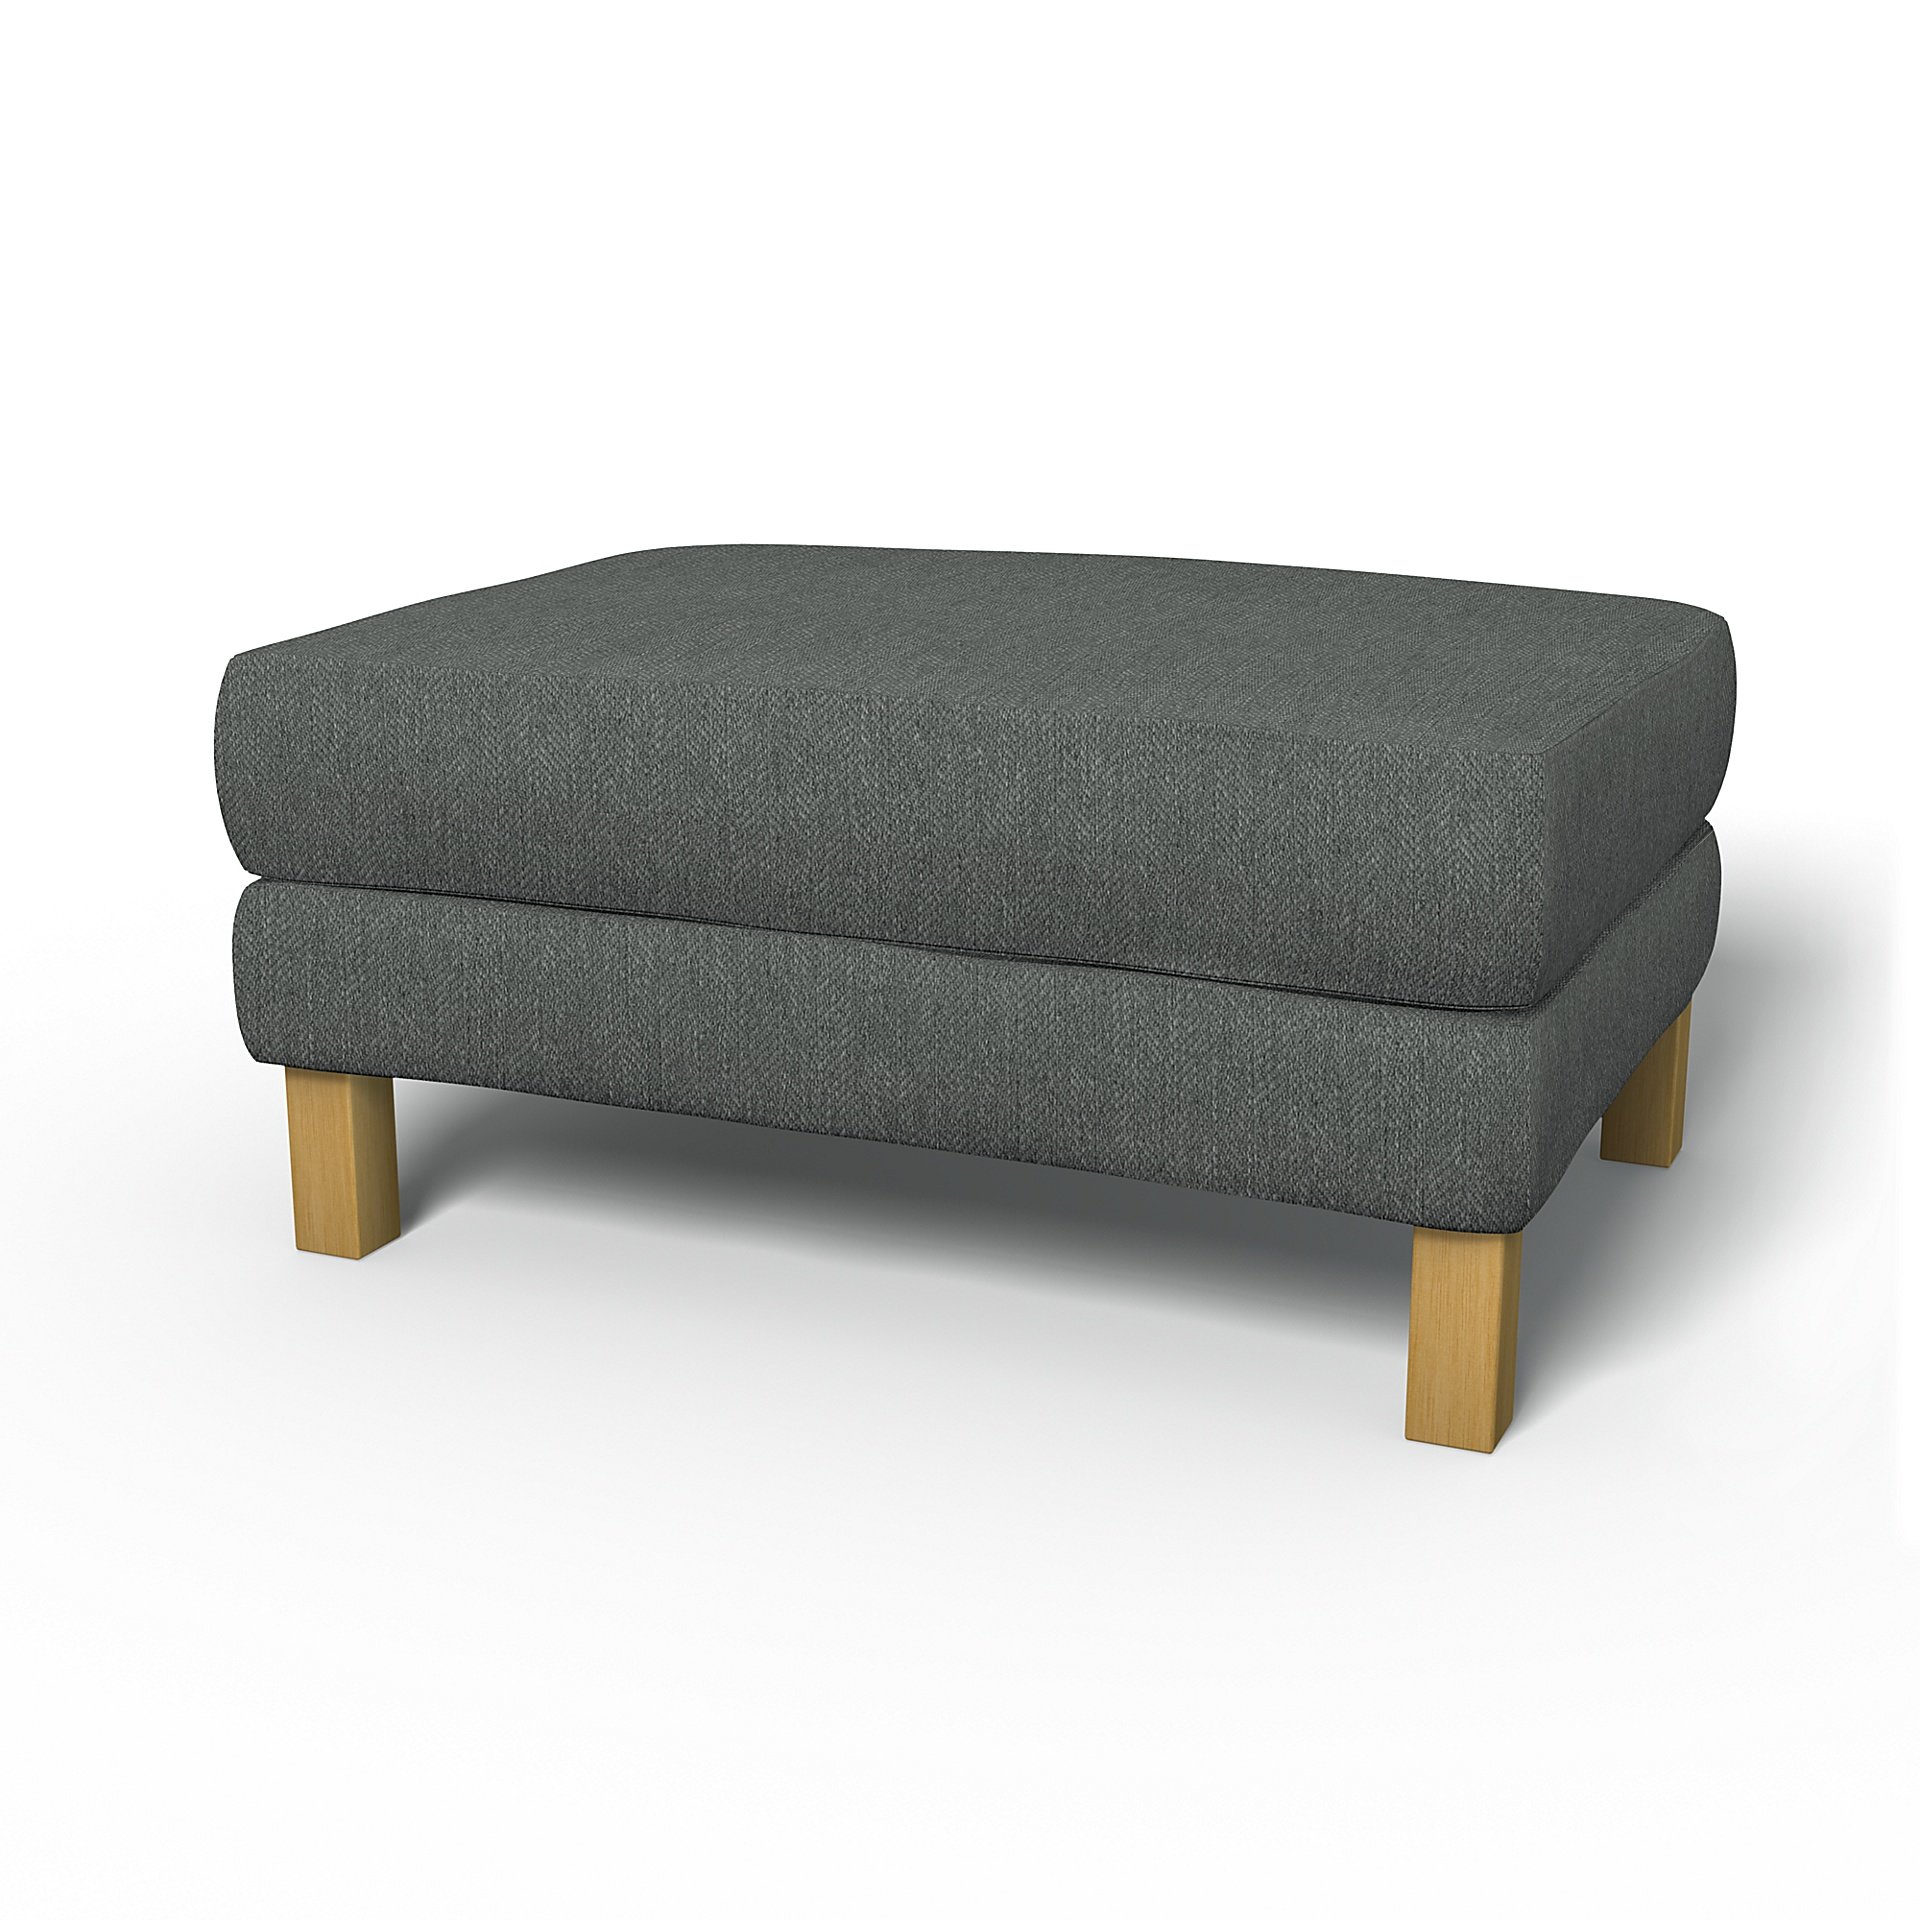 IKEA - Karlstad Footstool Cover, Laurel, Boucle & Texture - Bemz